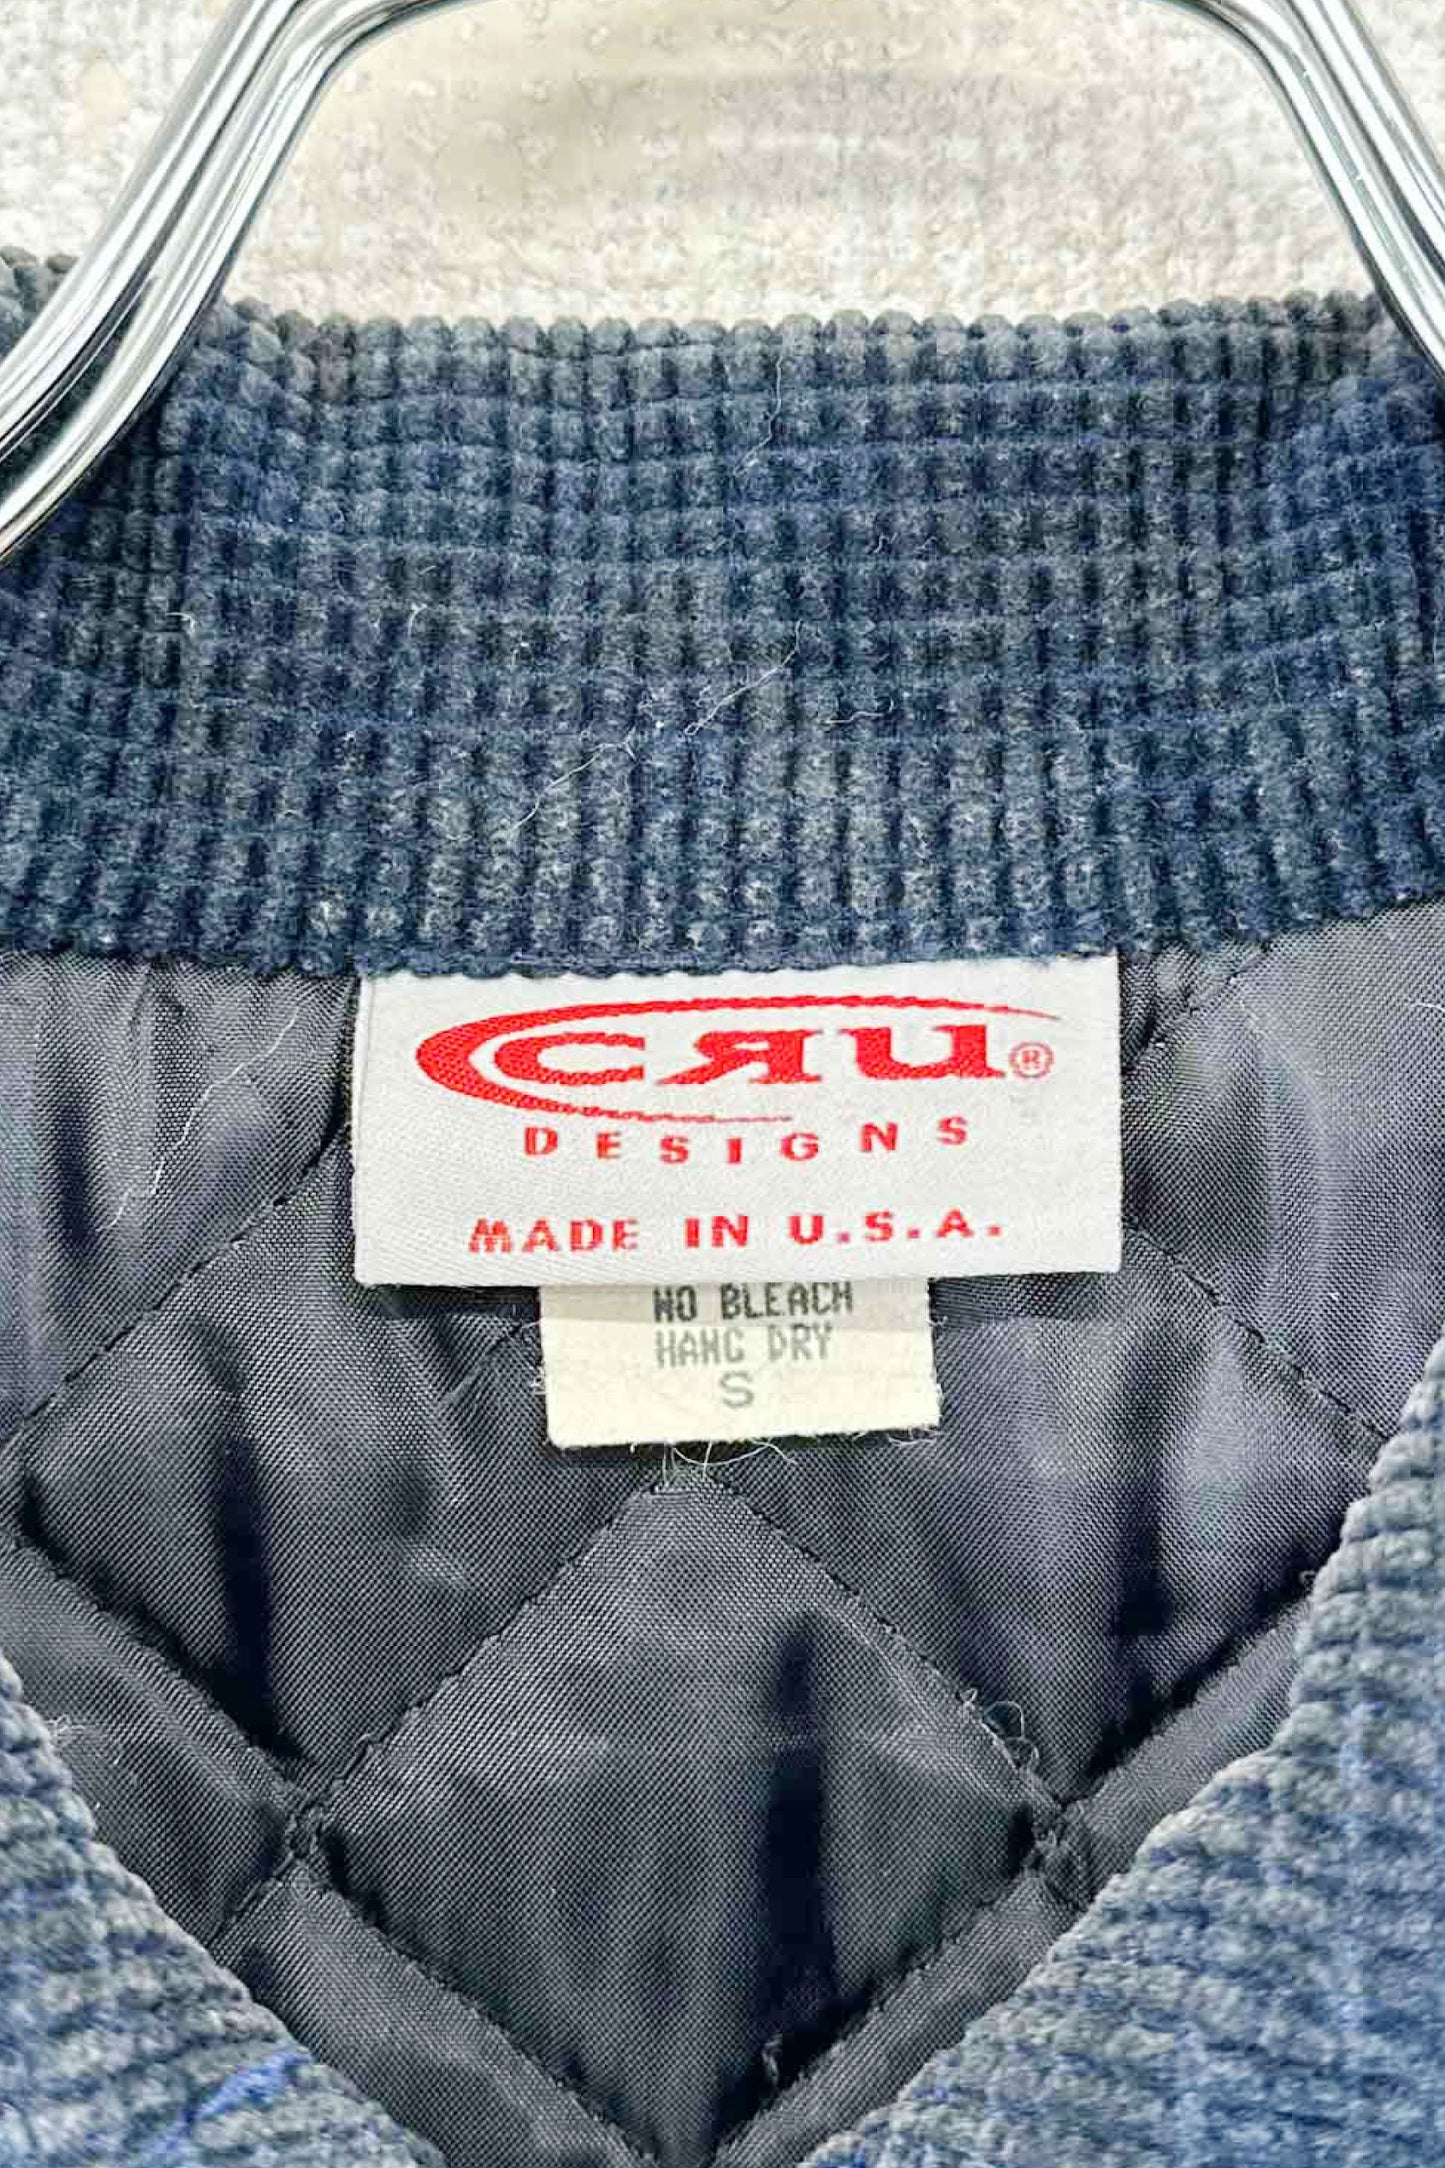 Made in USA CRU designs jacket